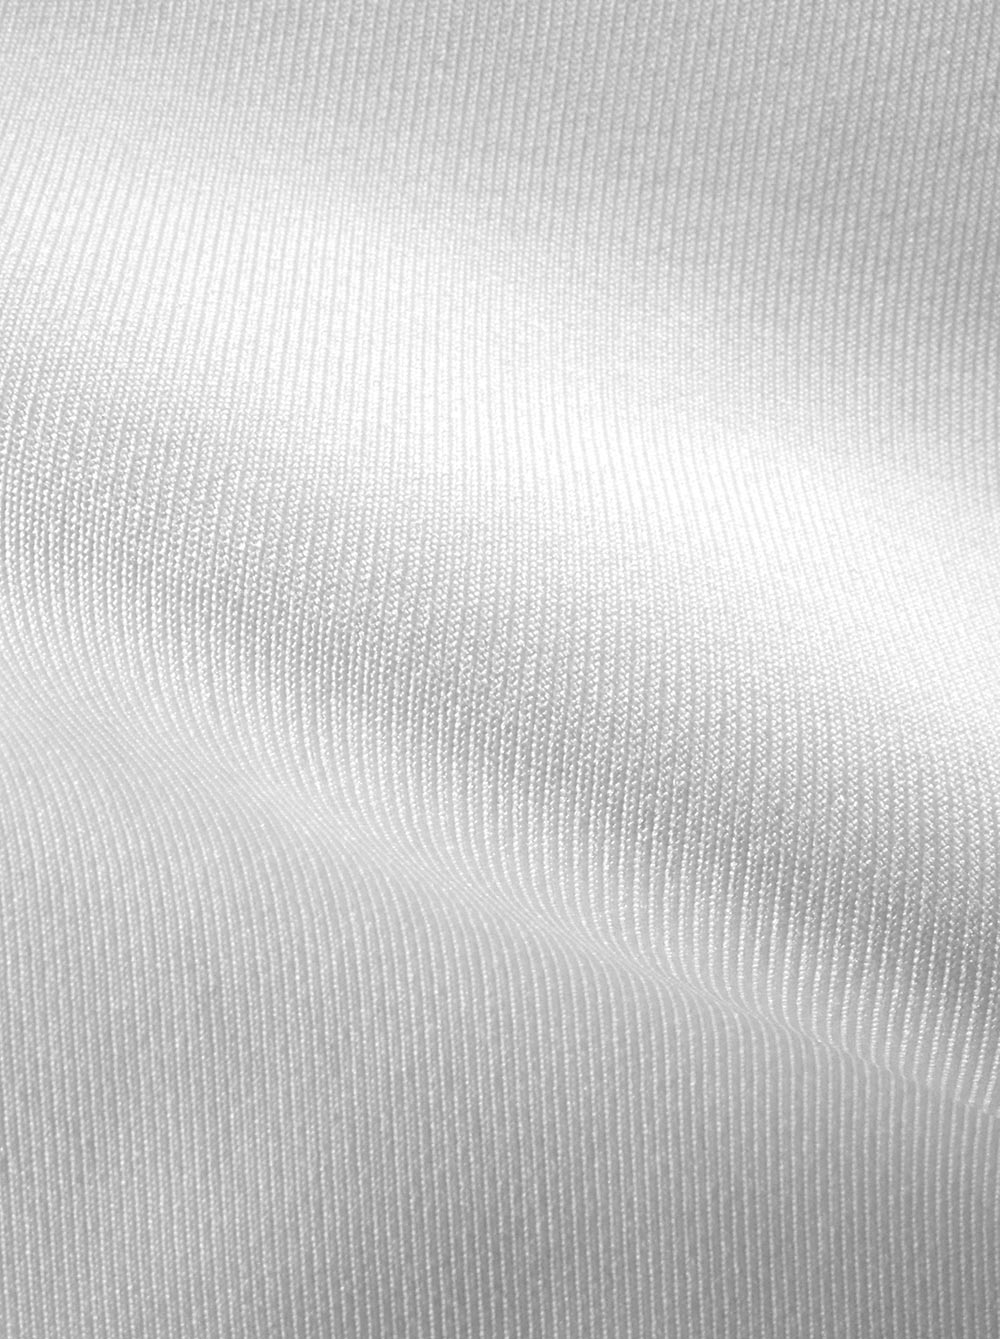 upf 50 spandex fabric sublimation print